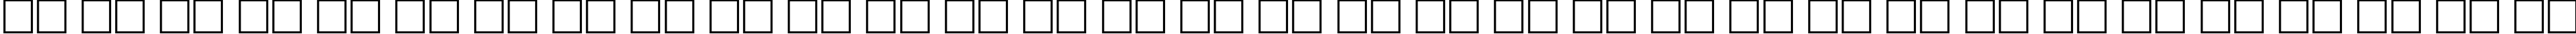 Пример написания русского алфавита шрифтом Time Roman Bold